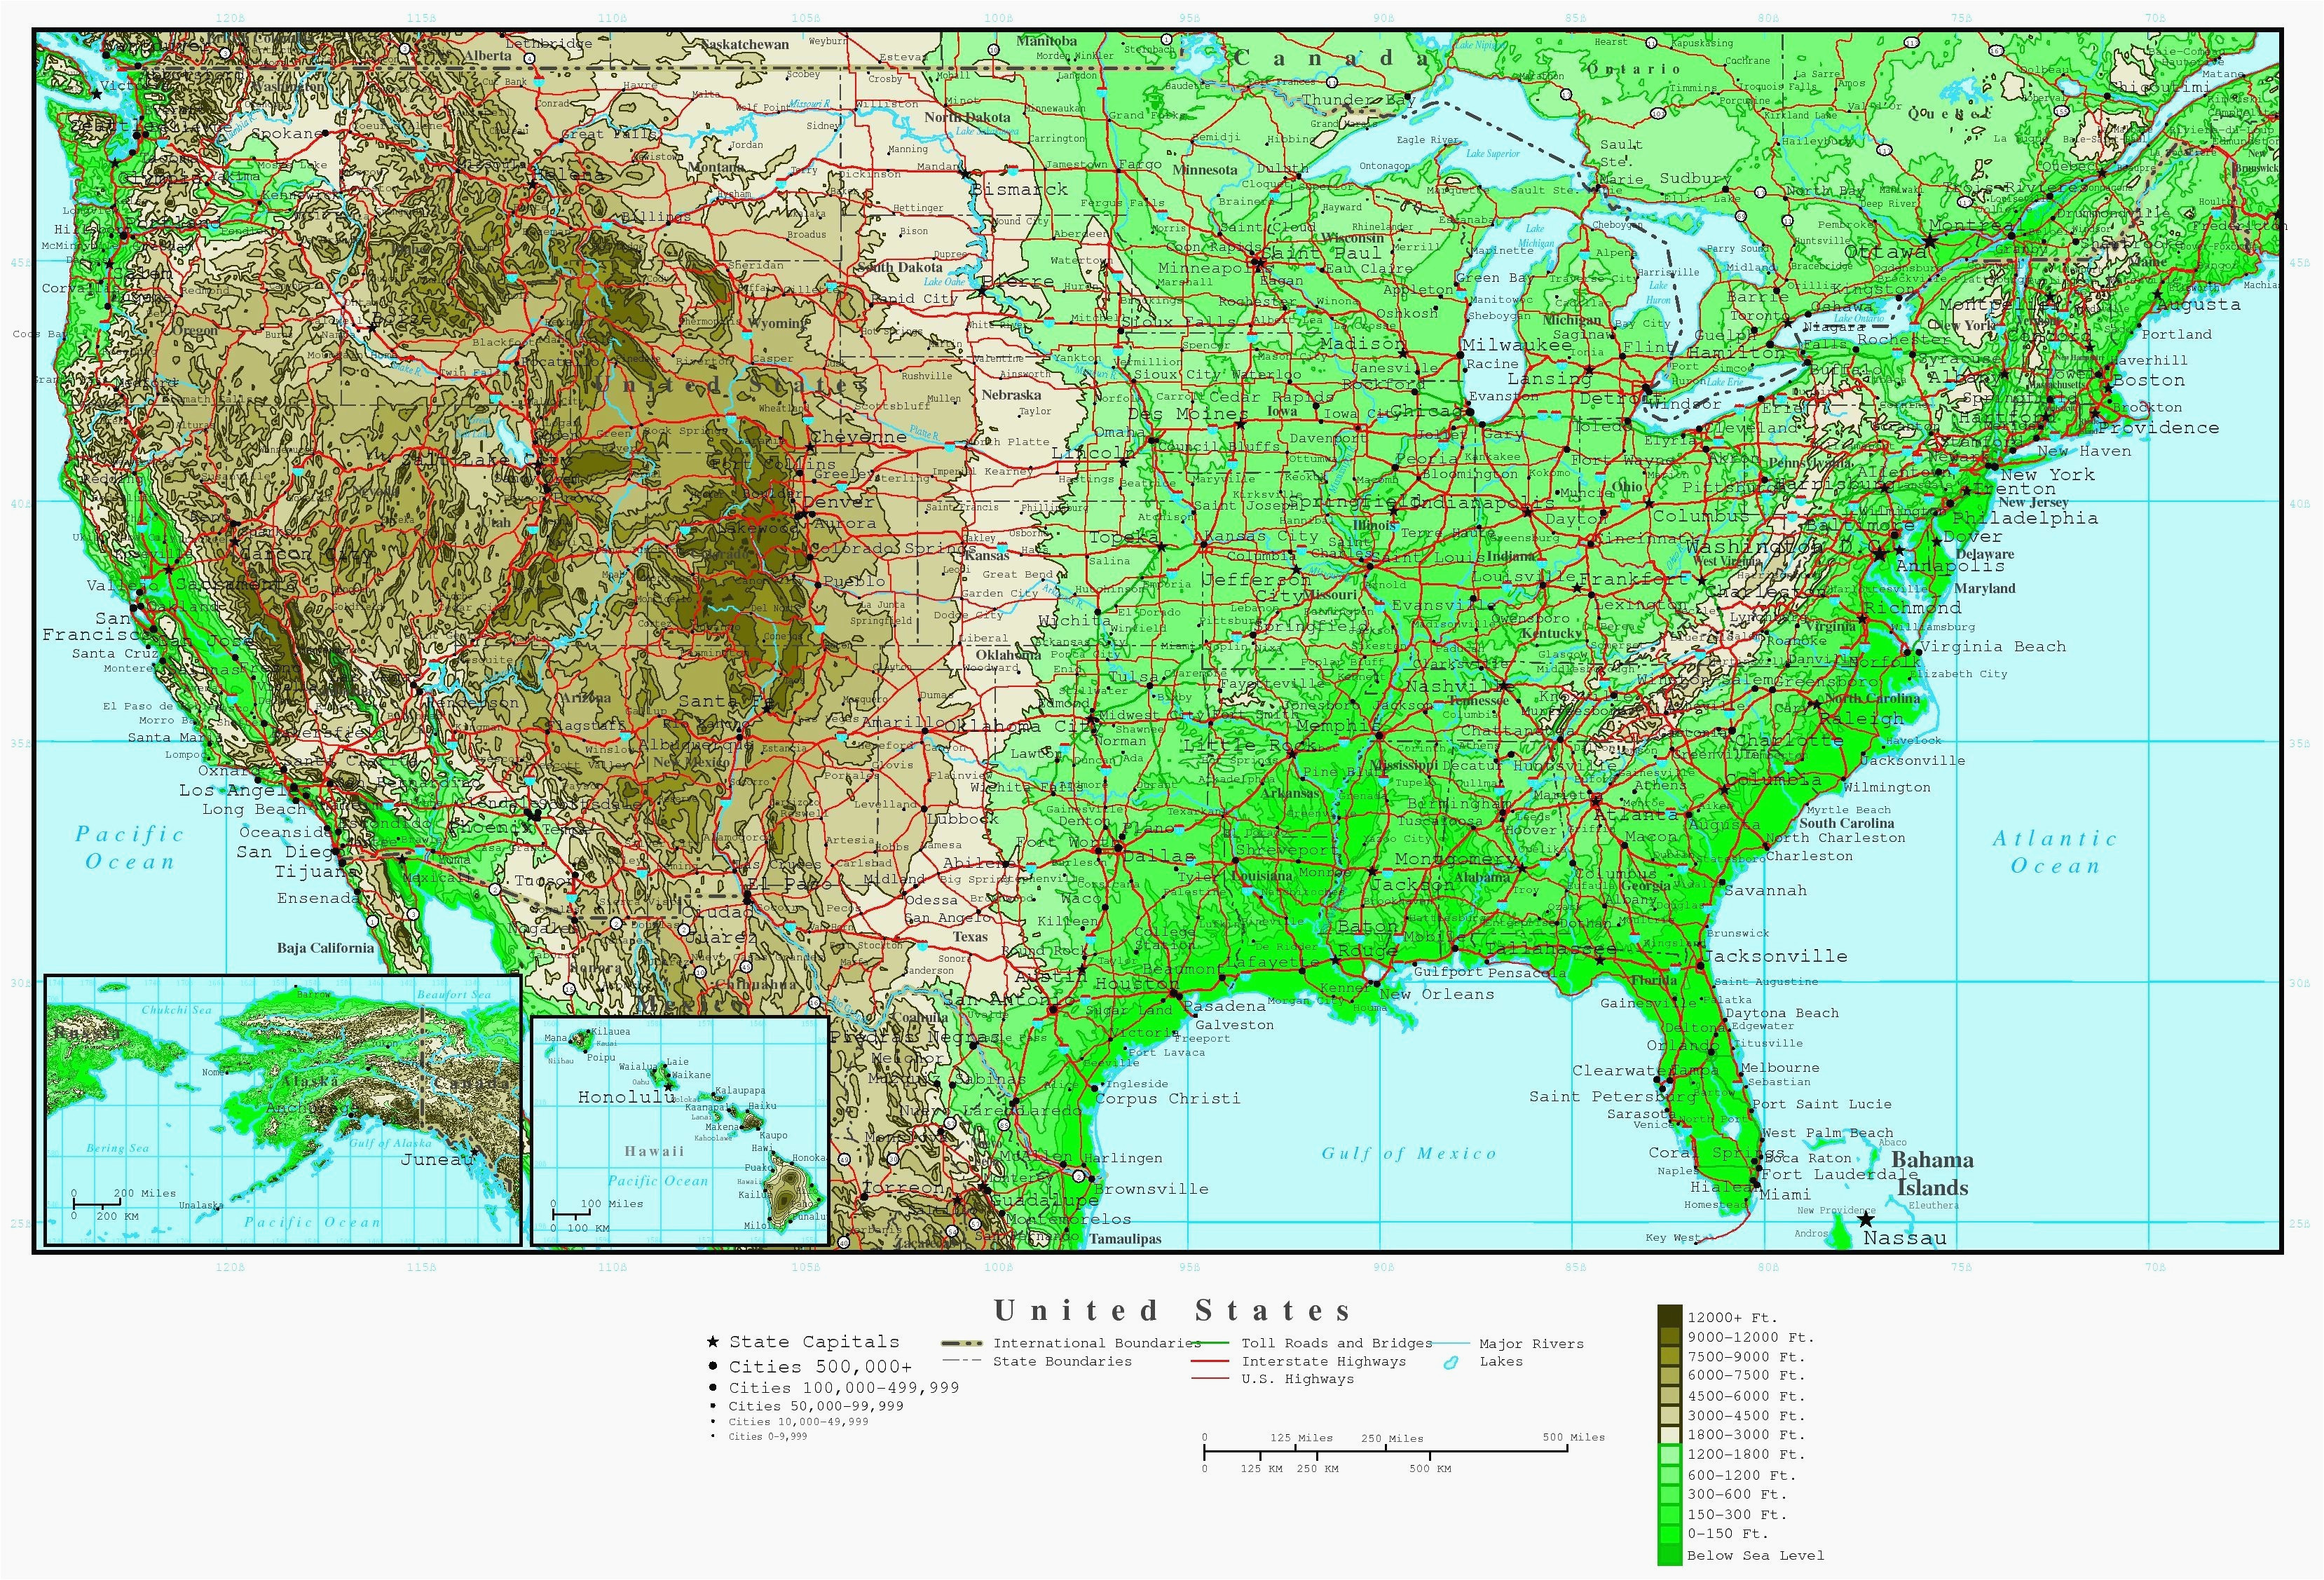 Canada Terrain Map Elevation Map Of Alabama Us Elevation Road Map Fresh Us Terrain Map